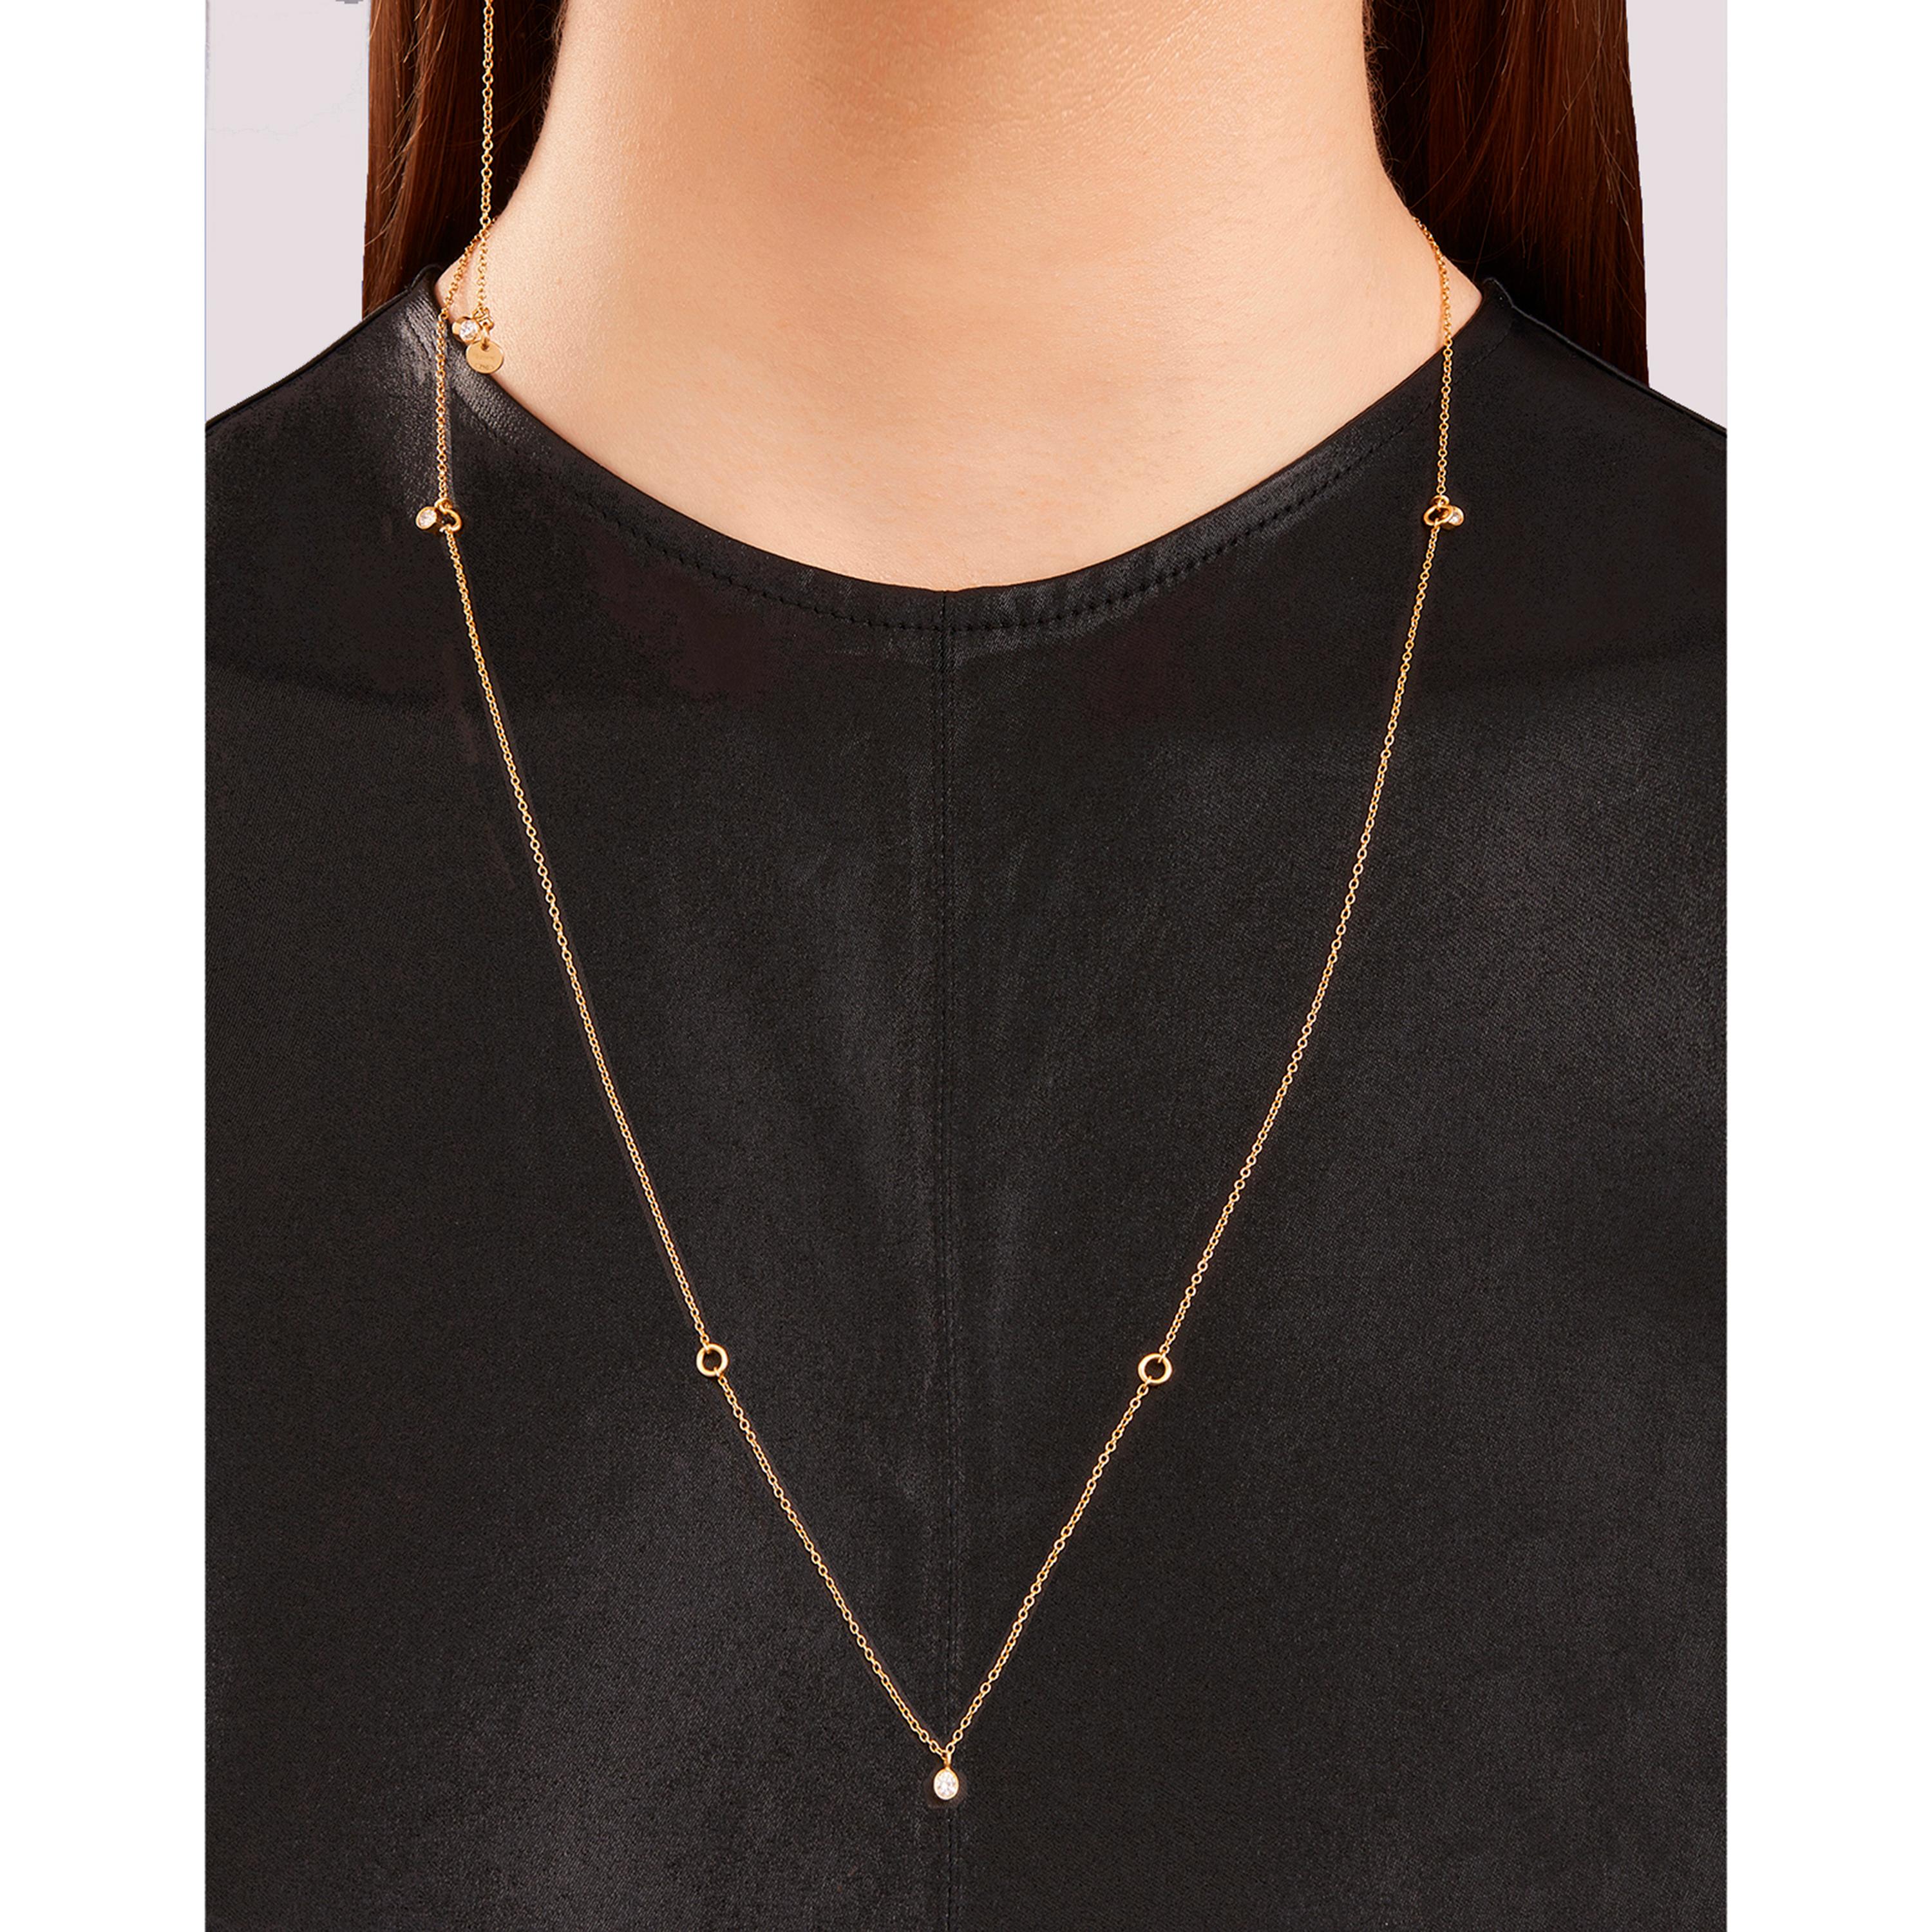 Nathalie Jean Contemporary 0.33 Carat Diamond Gold Pendant Chain Necklace For Sale 2